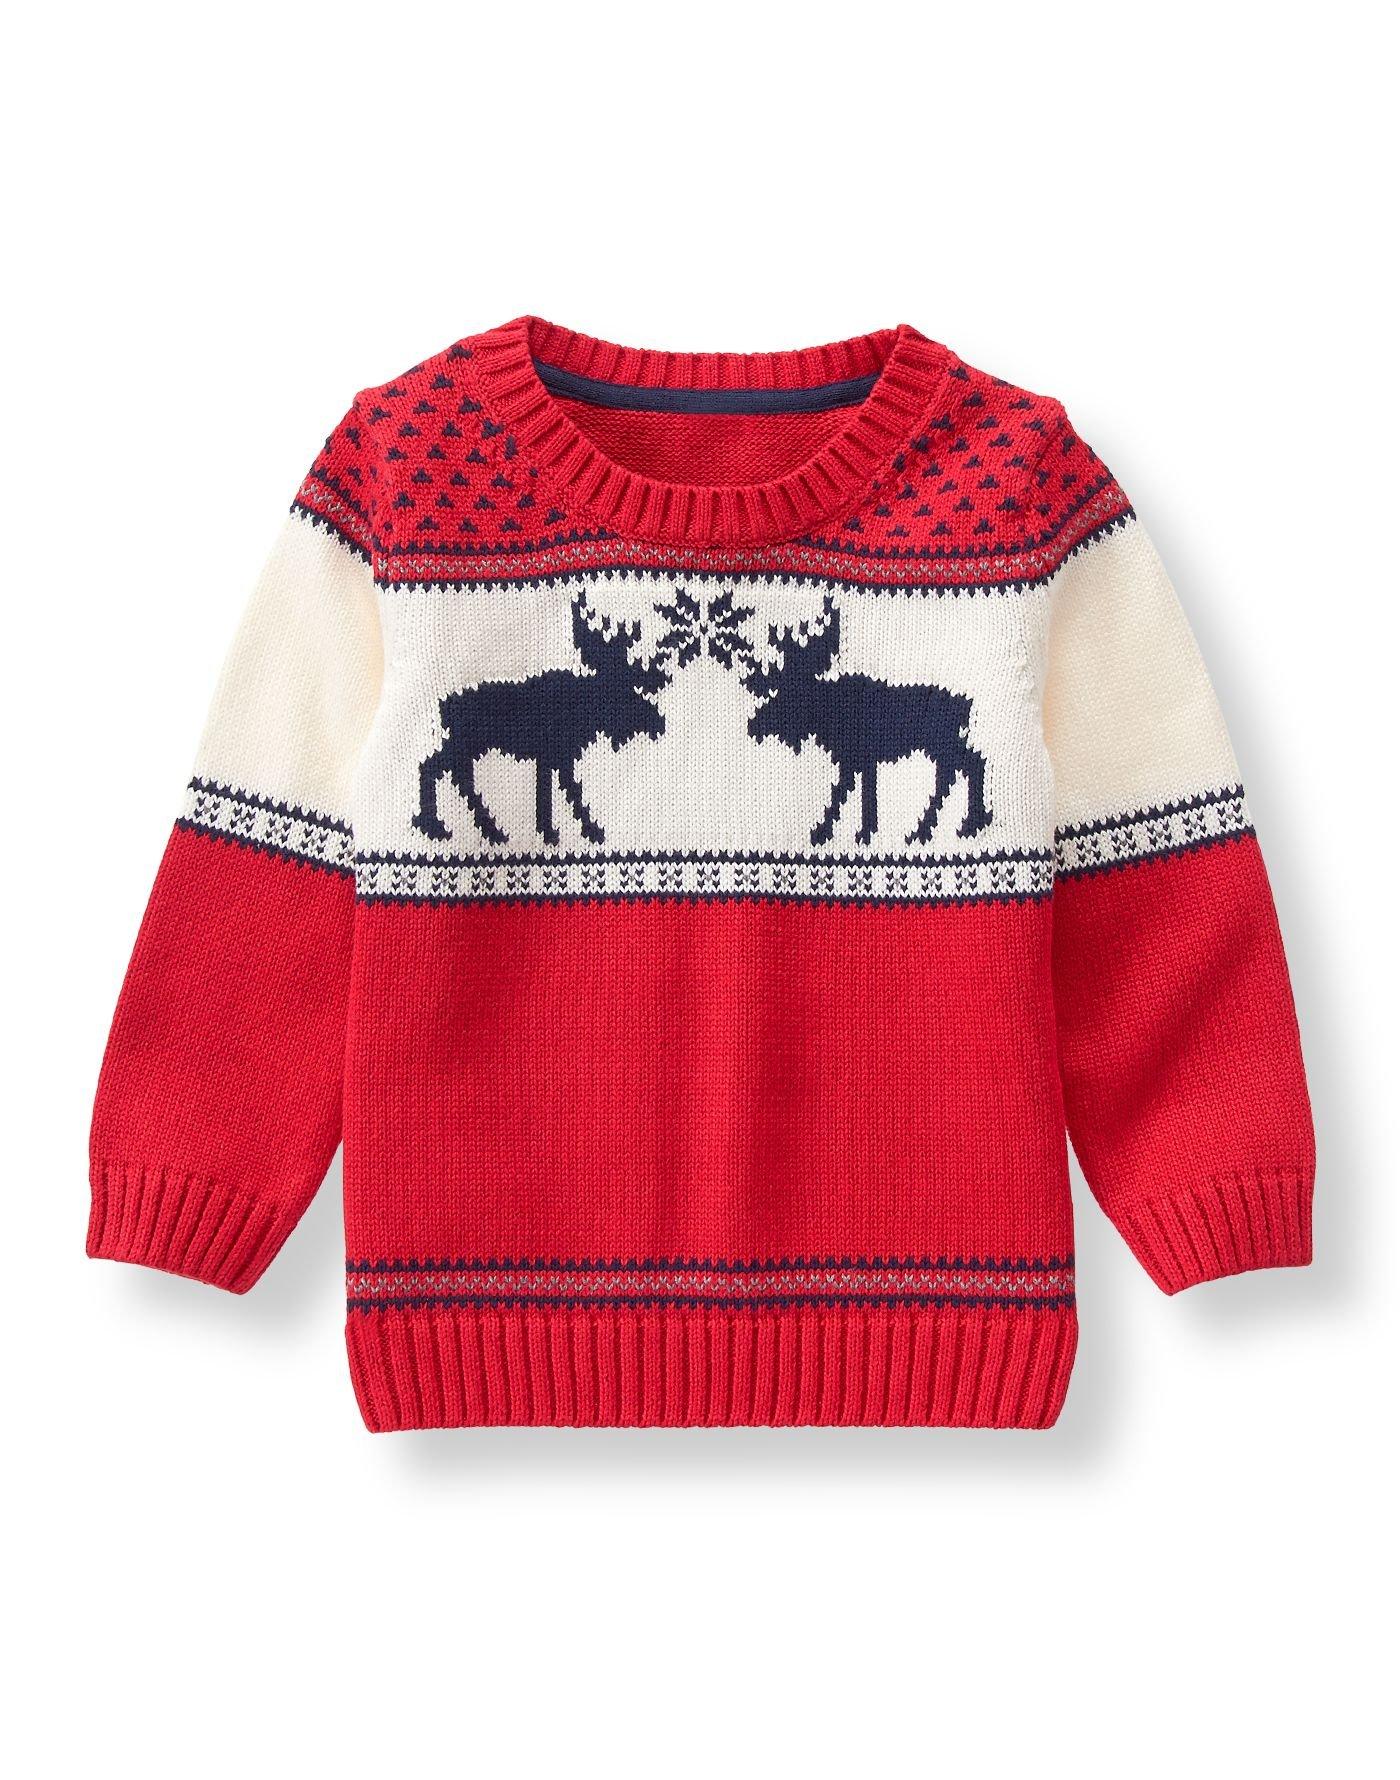 Moose Sweater image number 0